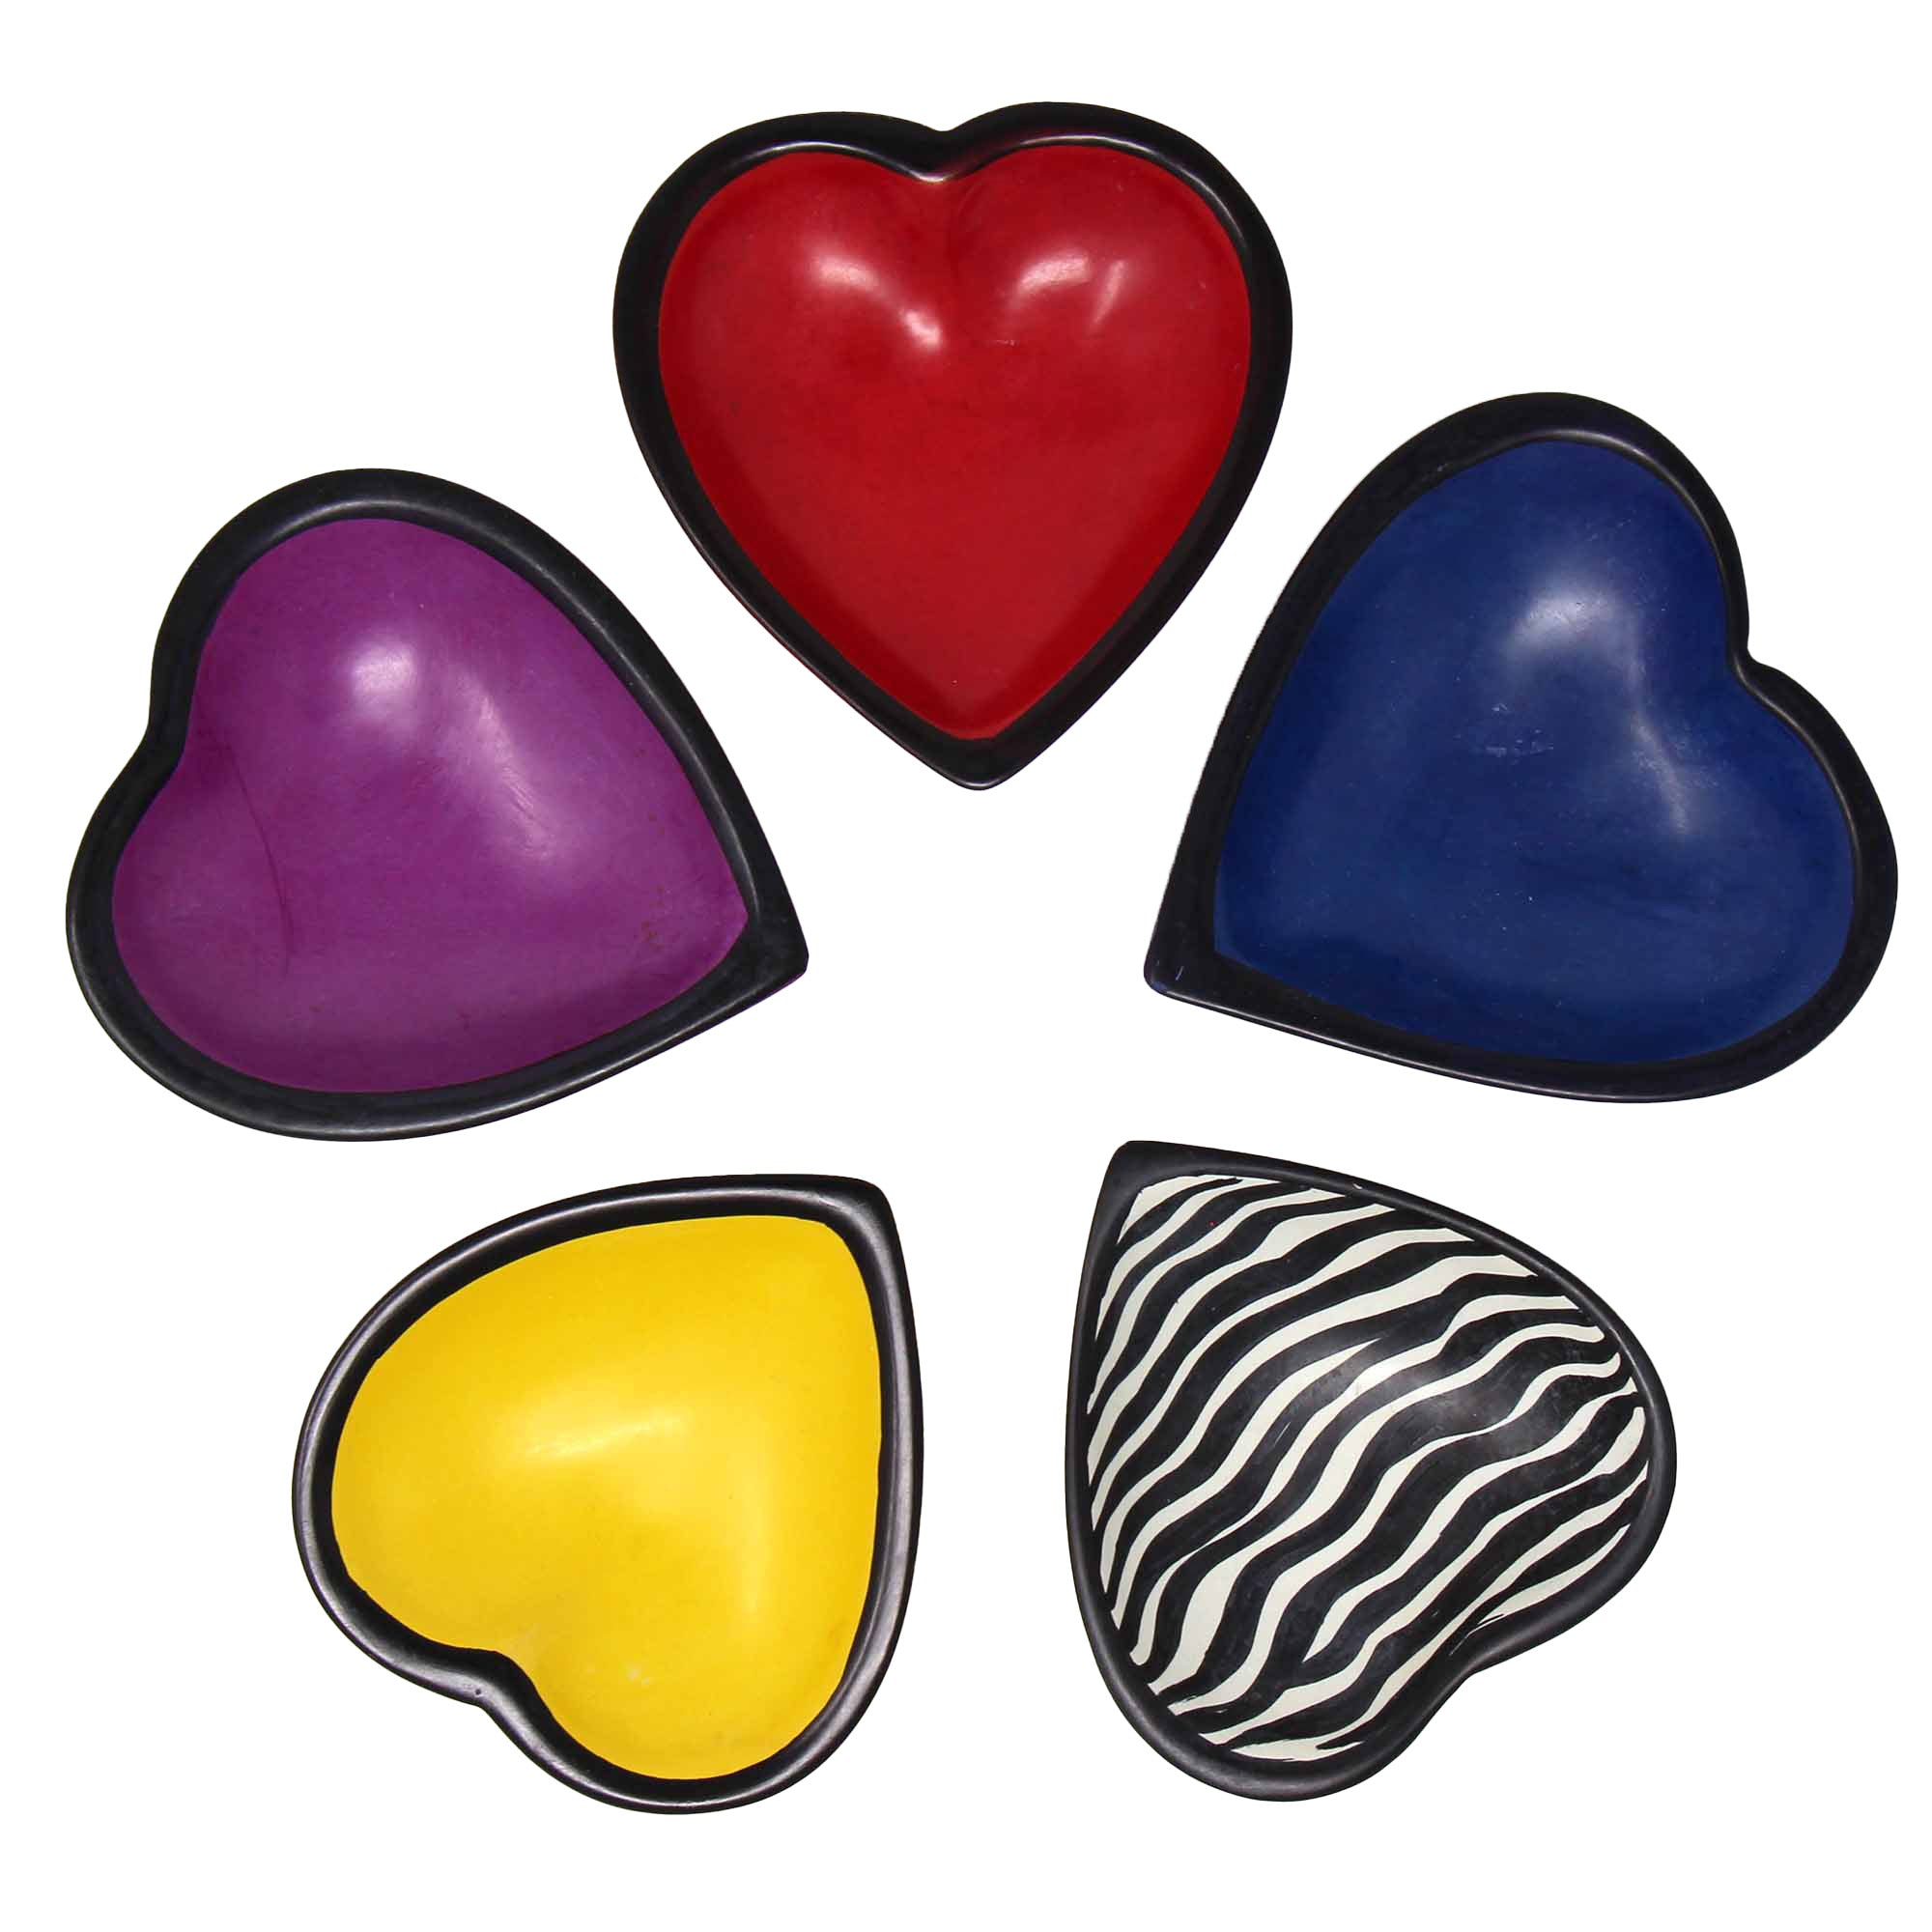 Single Soapstone Heart Bowls - Small 3.5-inch - Modern Decor